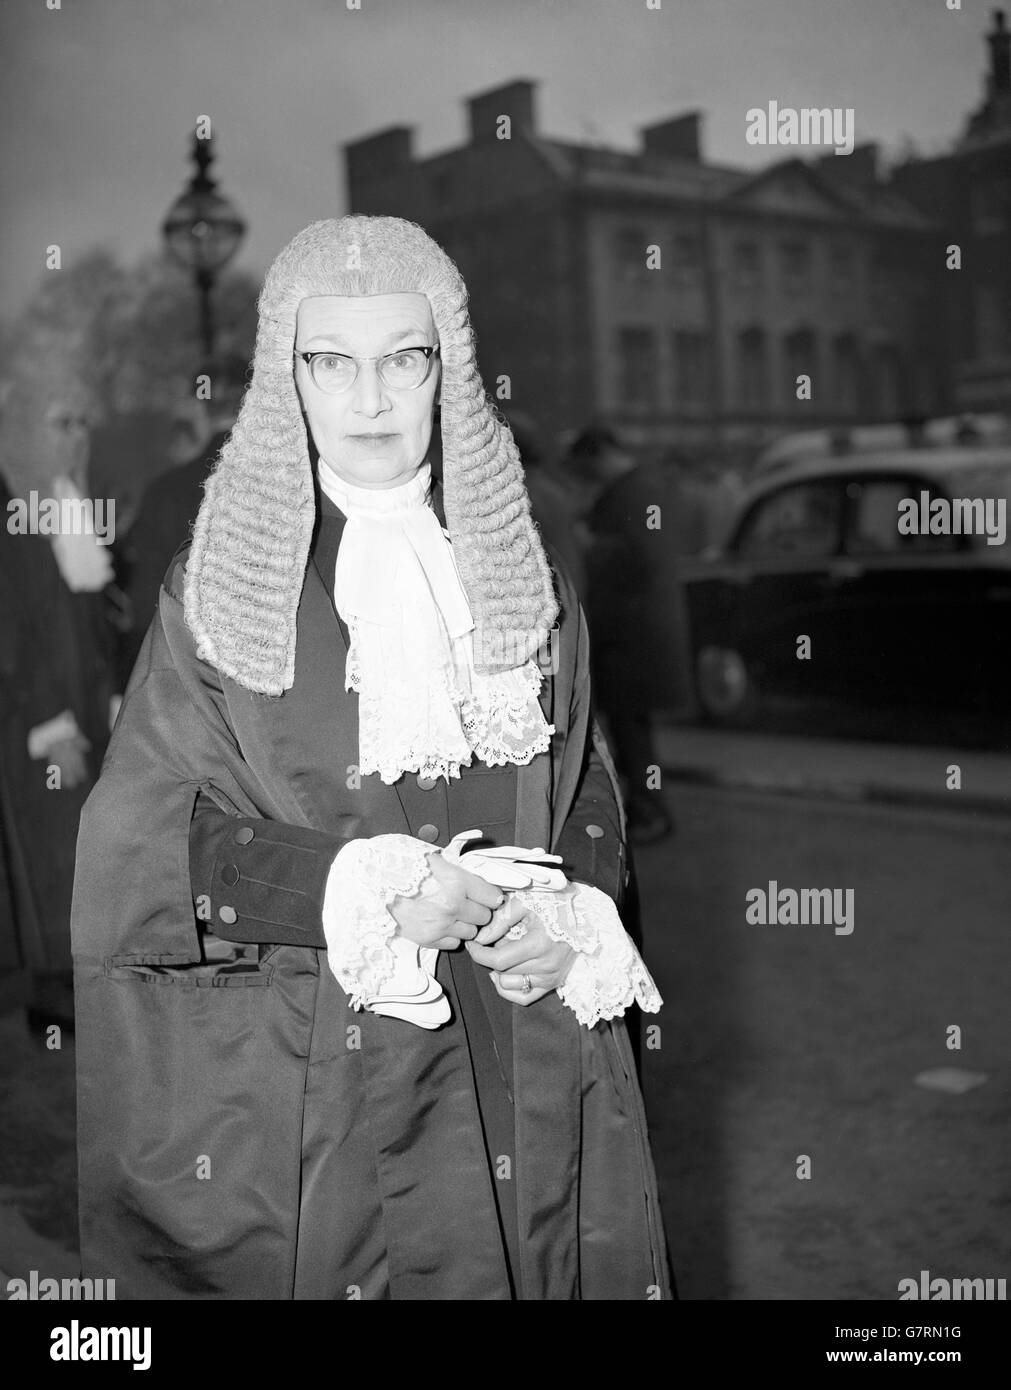 Gesetz - Vereidigung der neuen Kronanwalt - Elizabeth Lane QC - Oberhaus, London Stockfoto